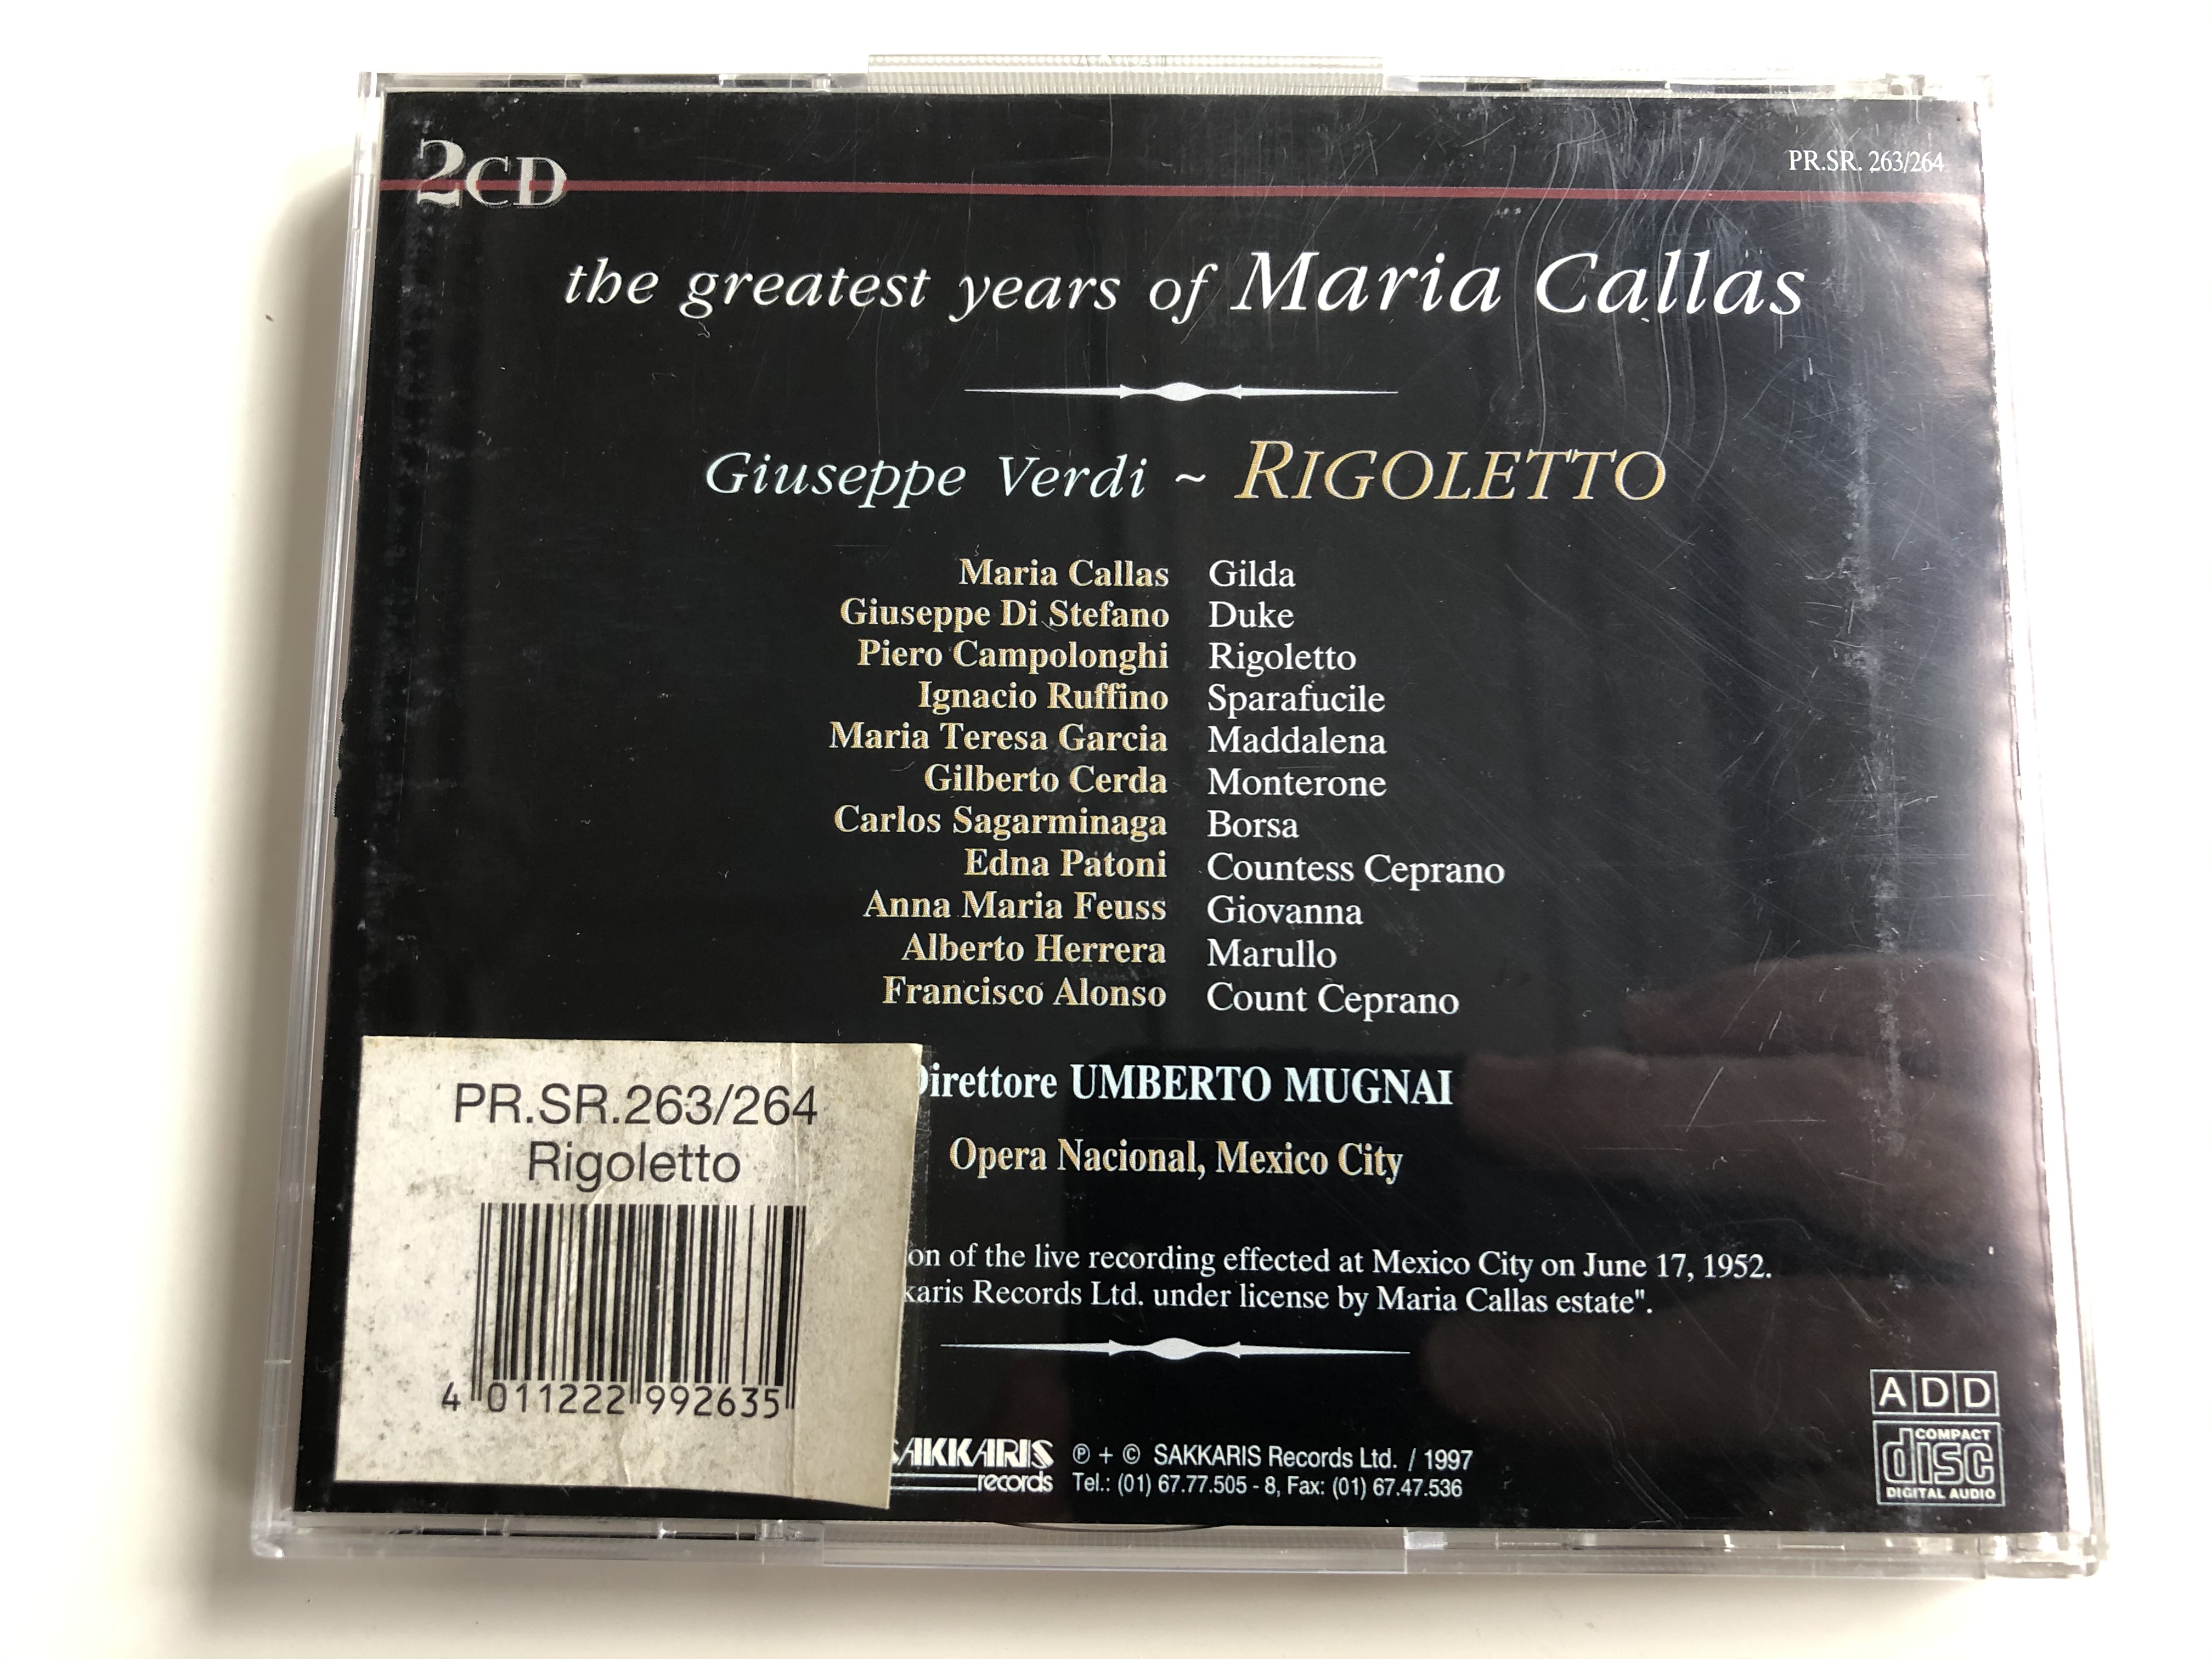 the-greatest-years-of-maria-callas-giuseppe-verdi-rigoletto-direttore-umberto-mugnai-mexico-city-1952-sakkaris-records-2x-audio-cd-1997-pr.sr.-263264-7-.jpg